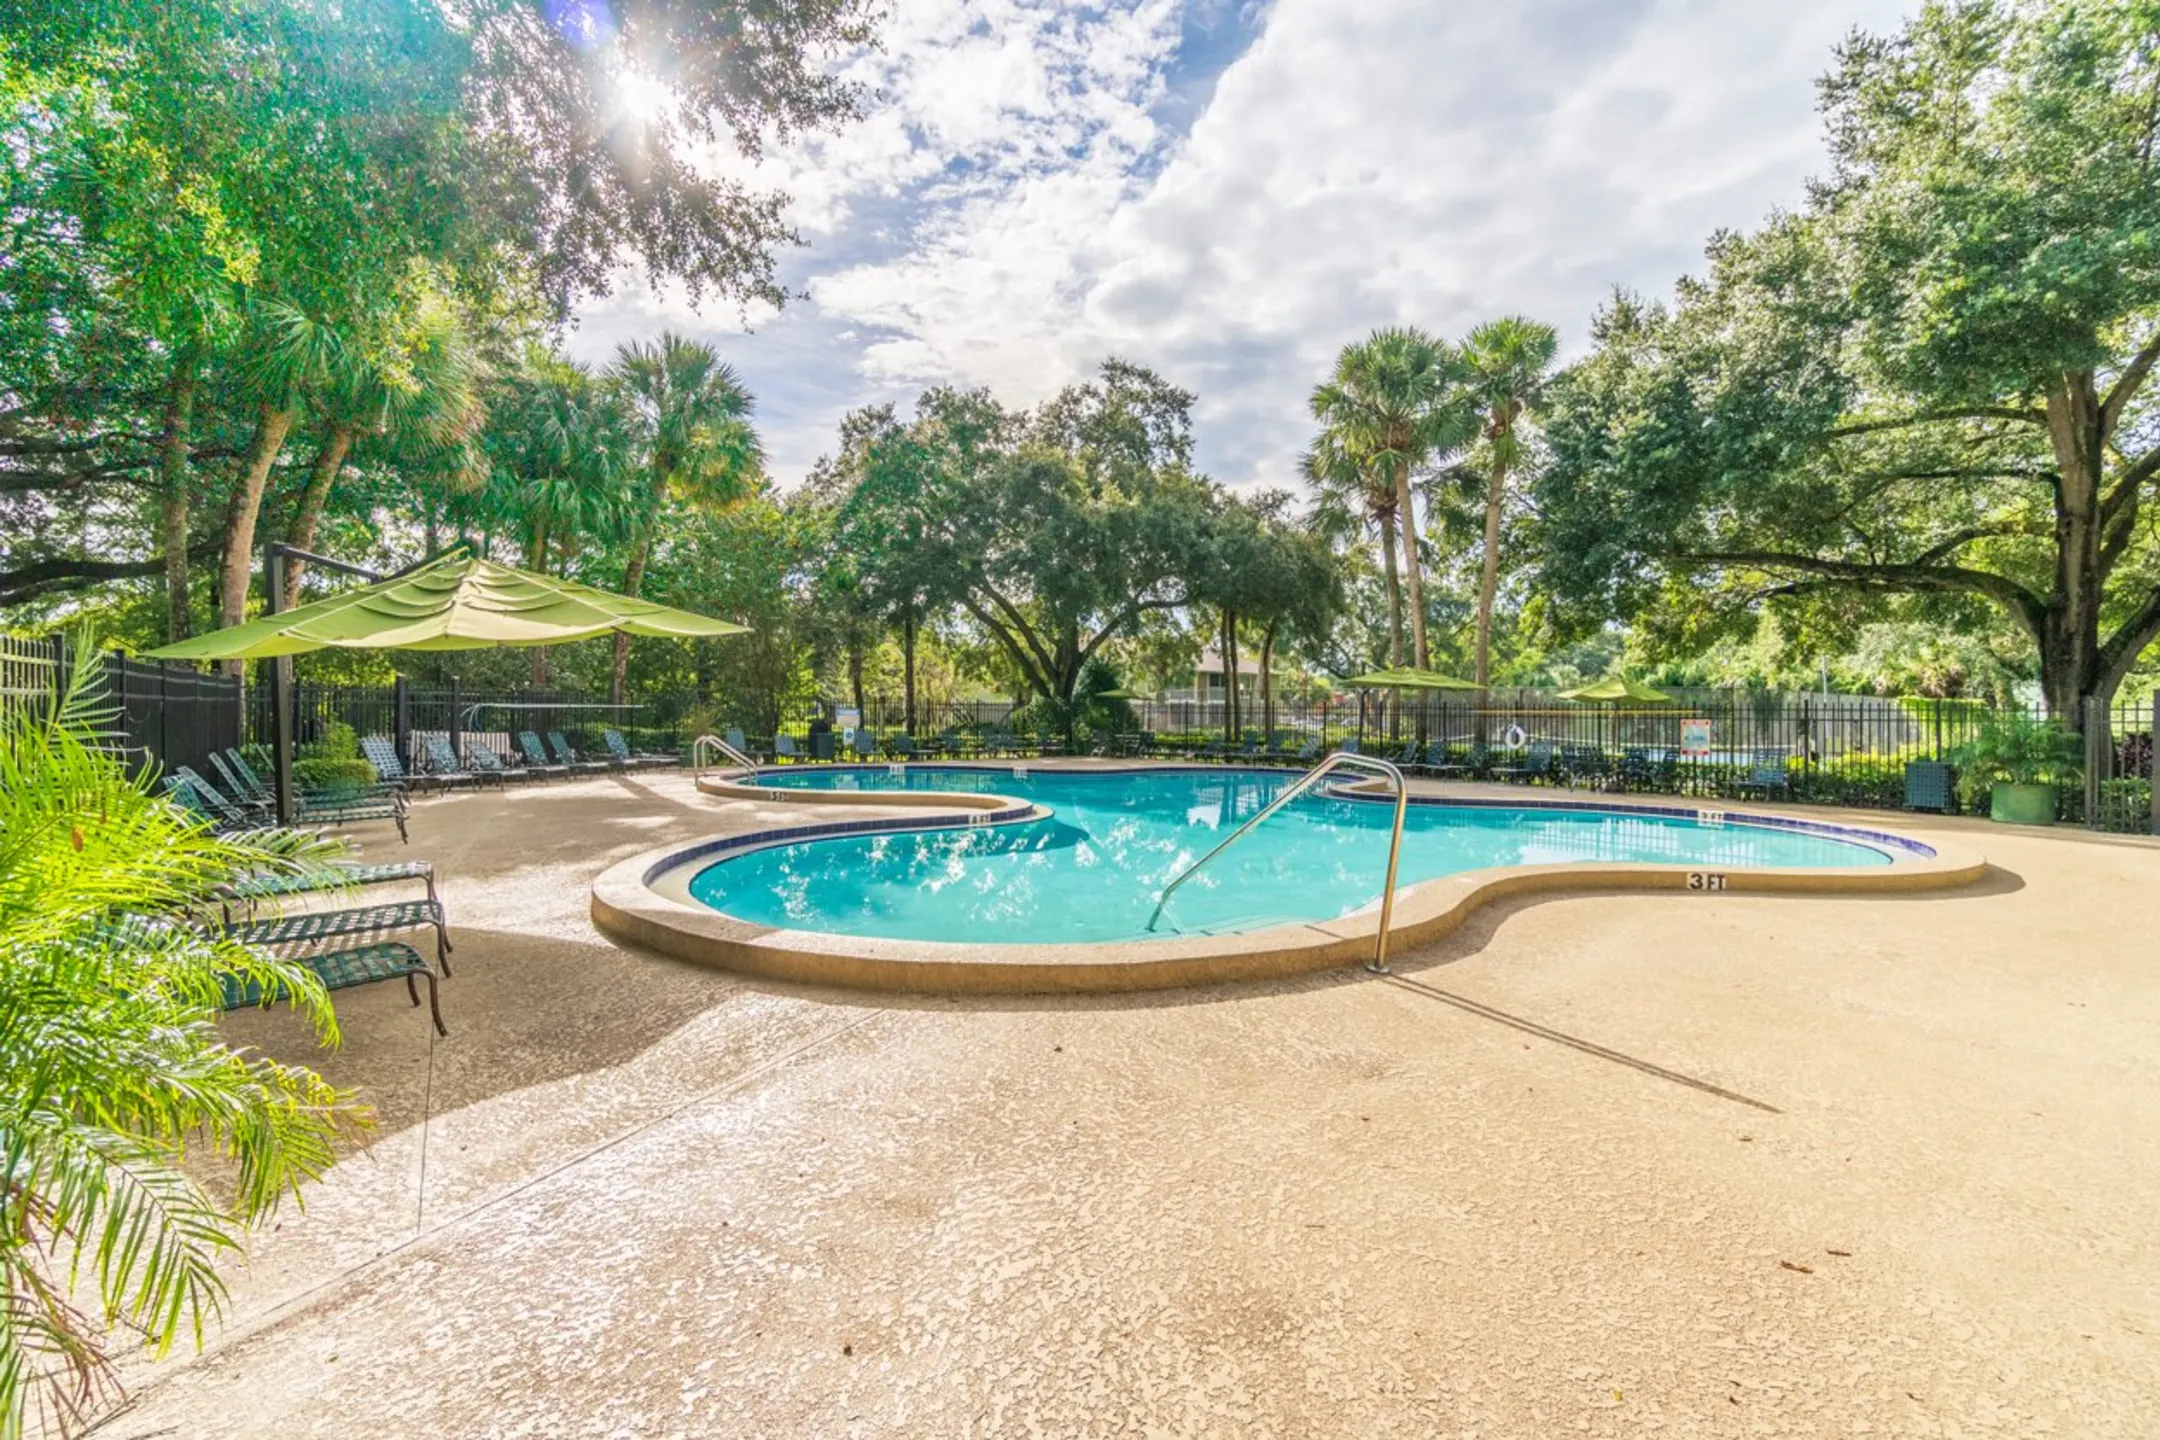 Pool - Laurel Oaks Apartments - Temple Terrace, FL